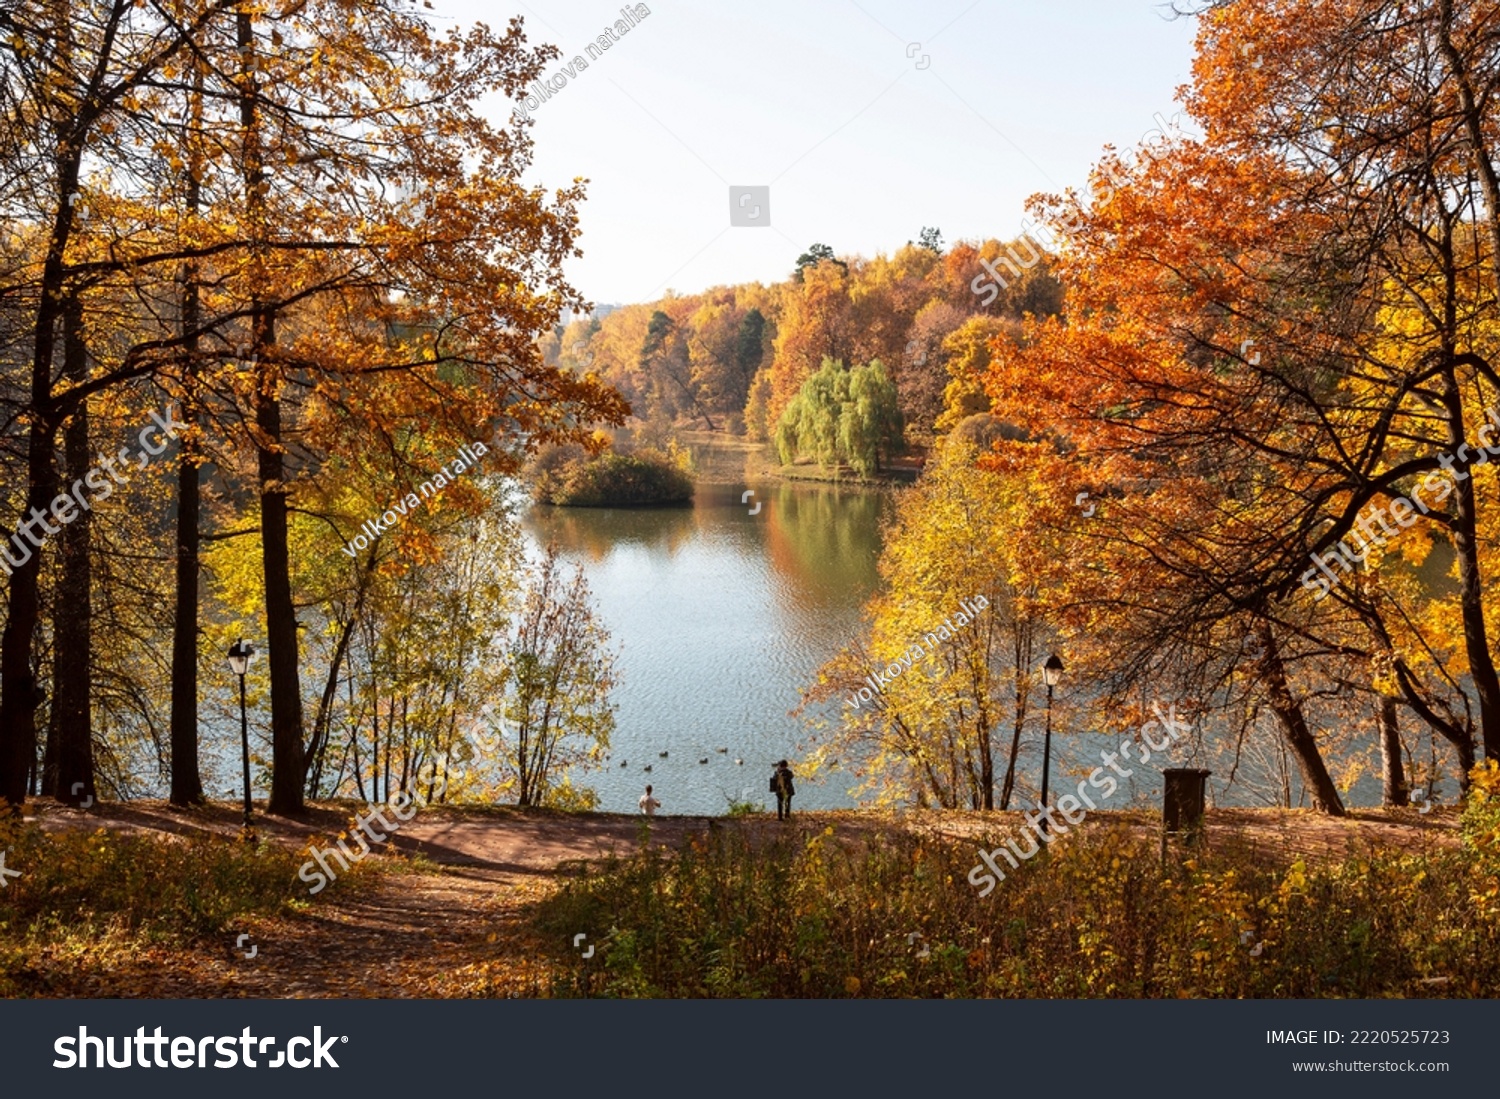 Beautiful autumn landscape - park, pond, trees with orange foliage #2220525723